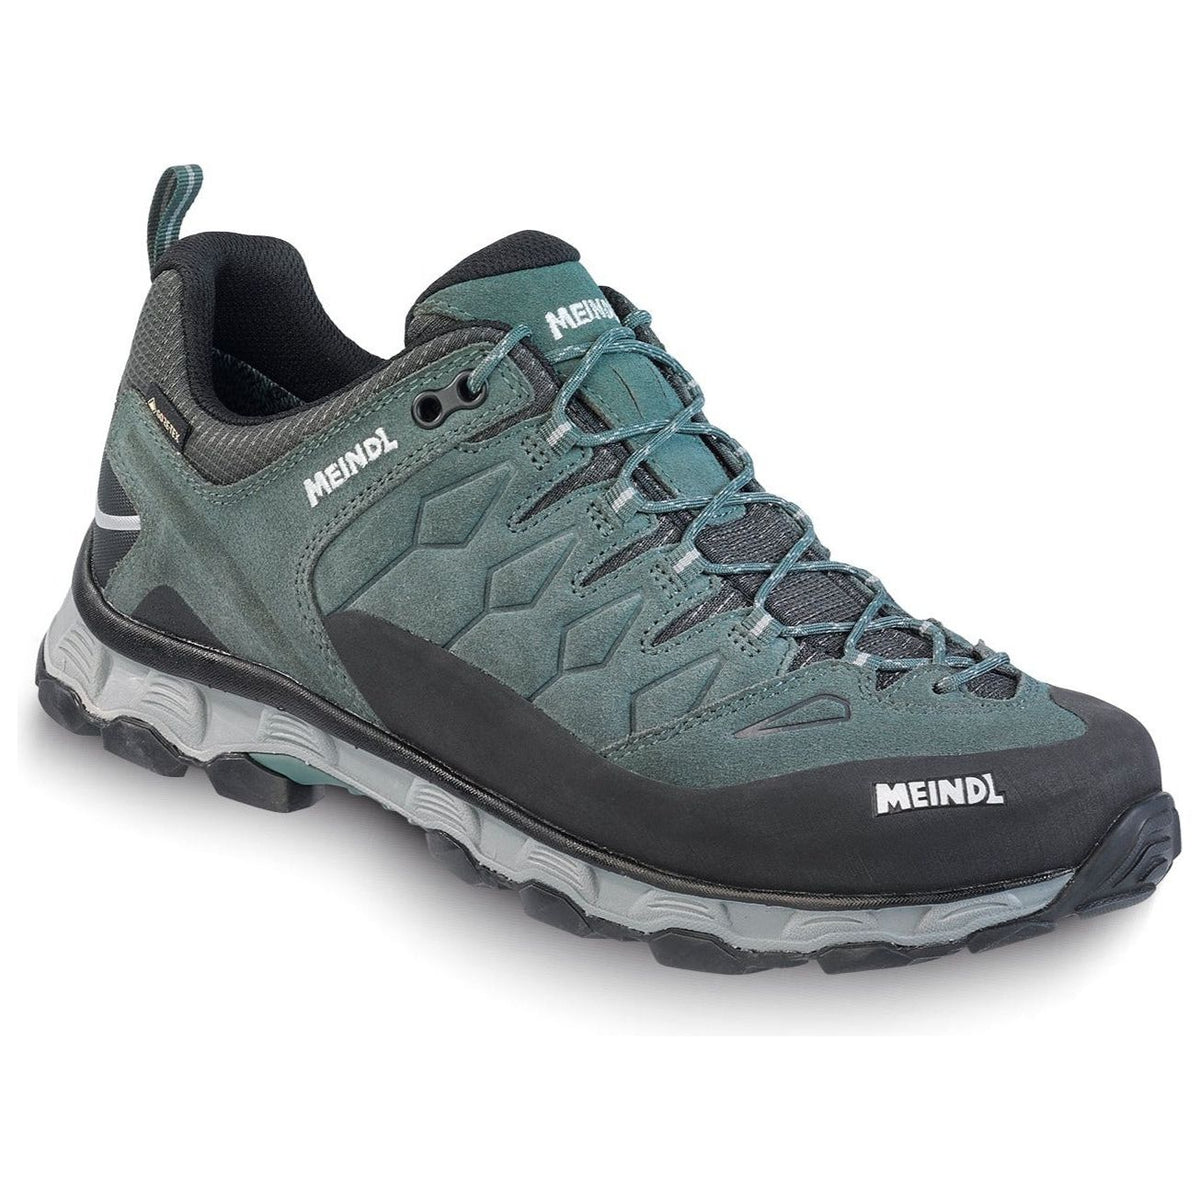 Meindl Lite Trail GTX Walking Shoes - Loden